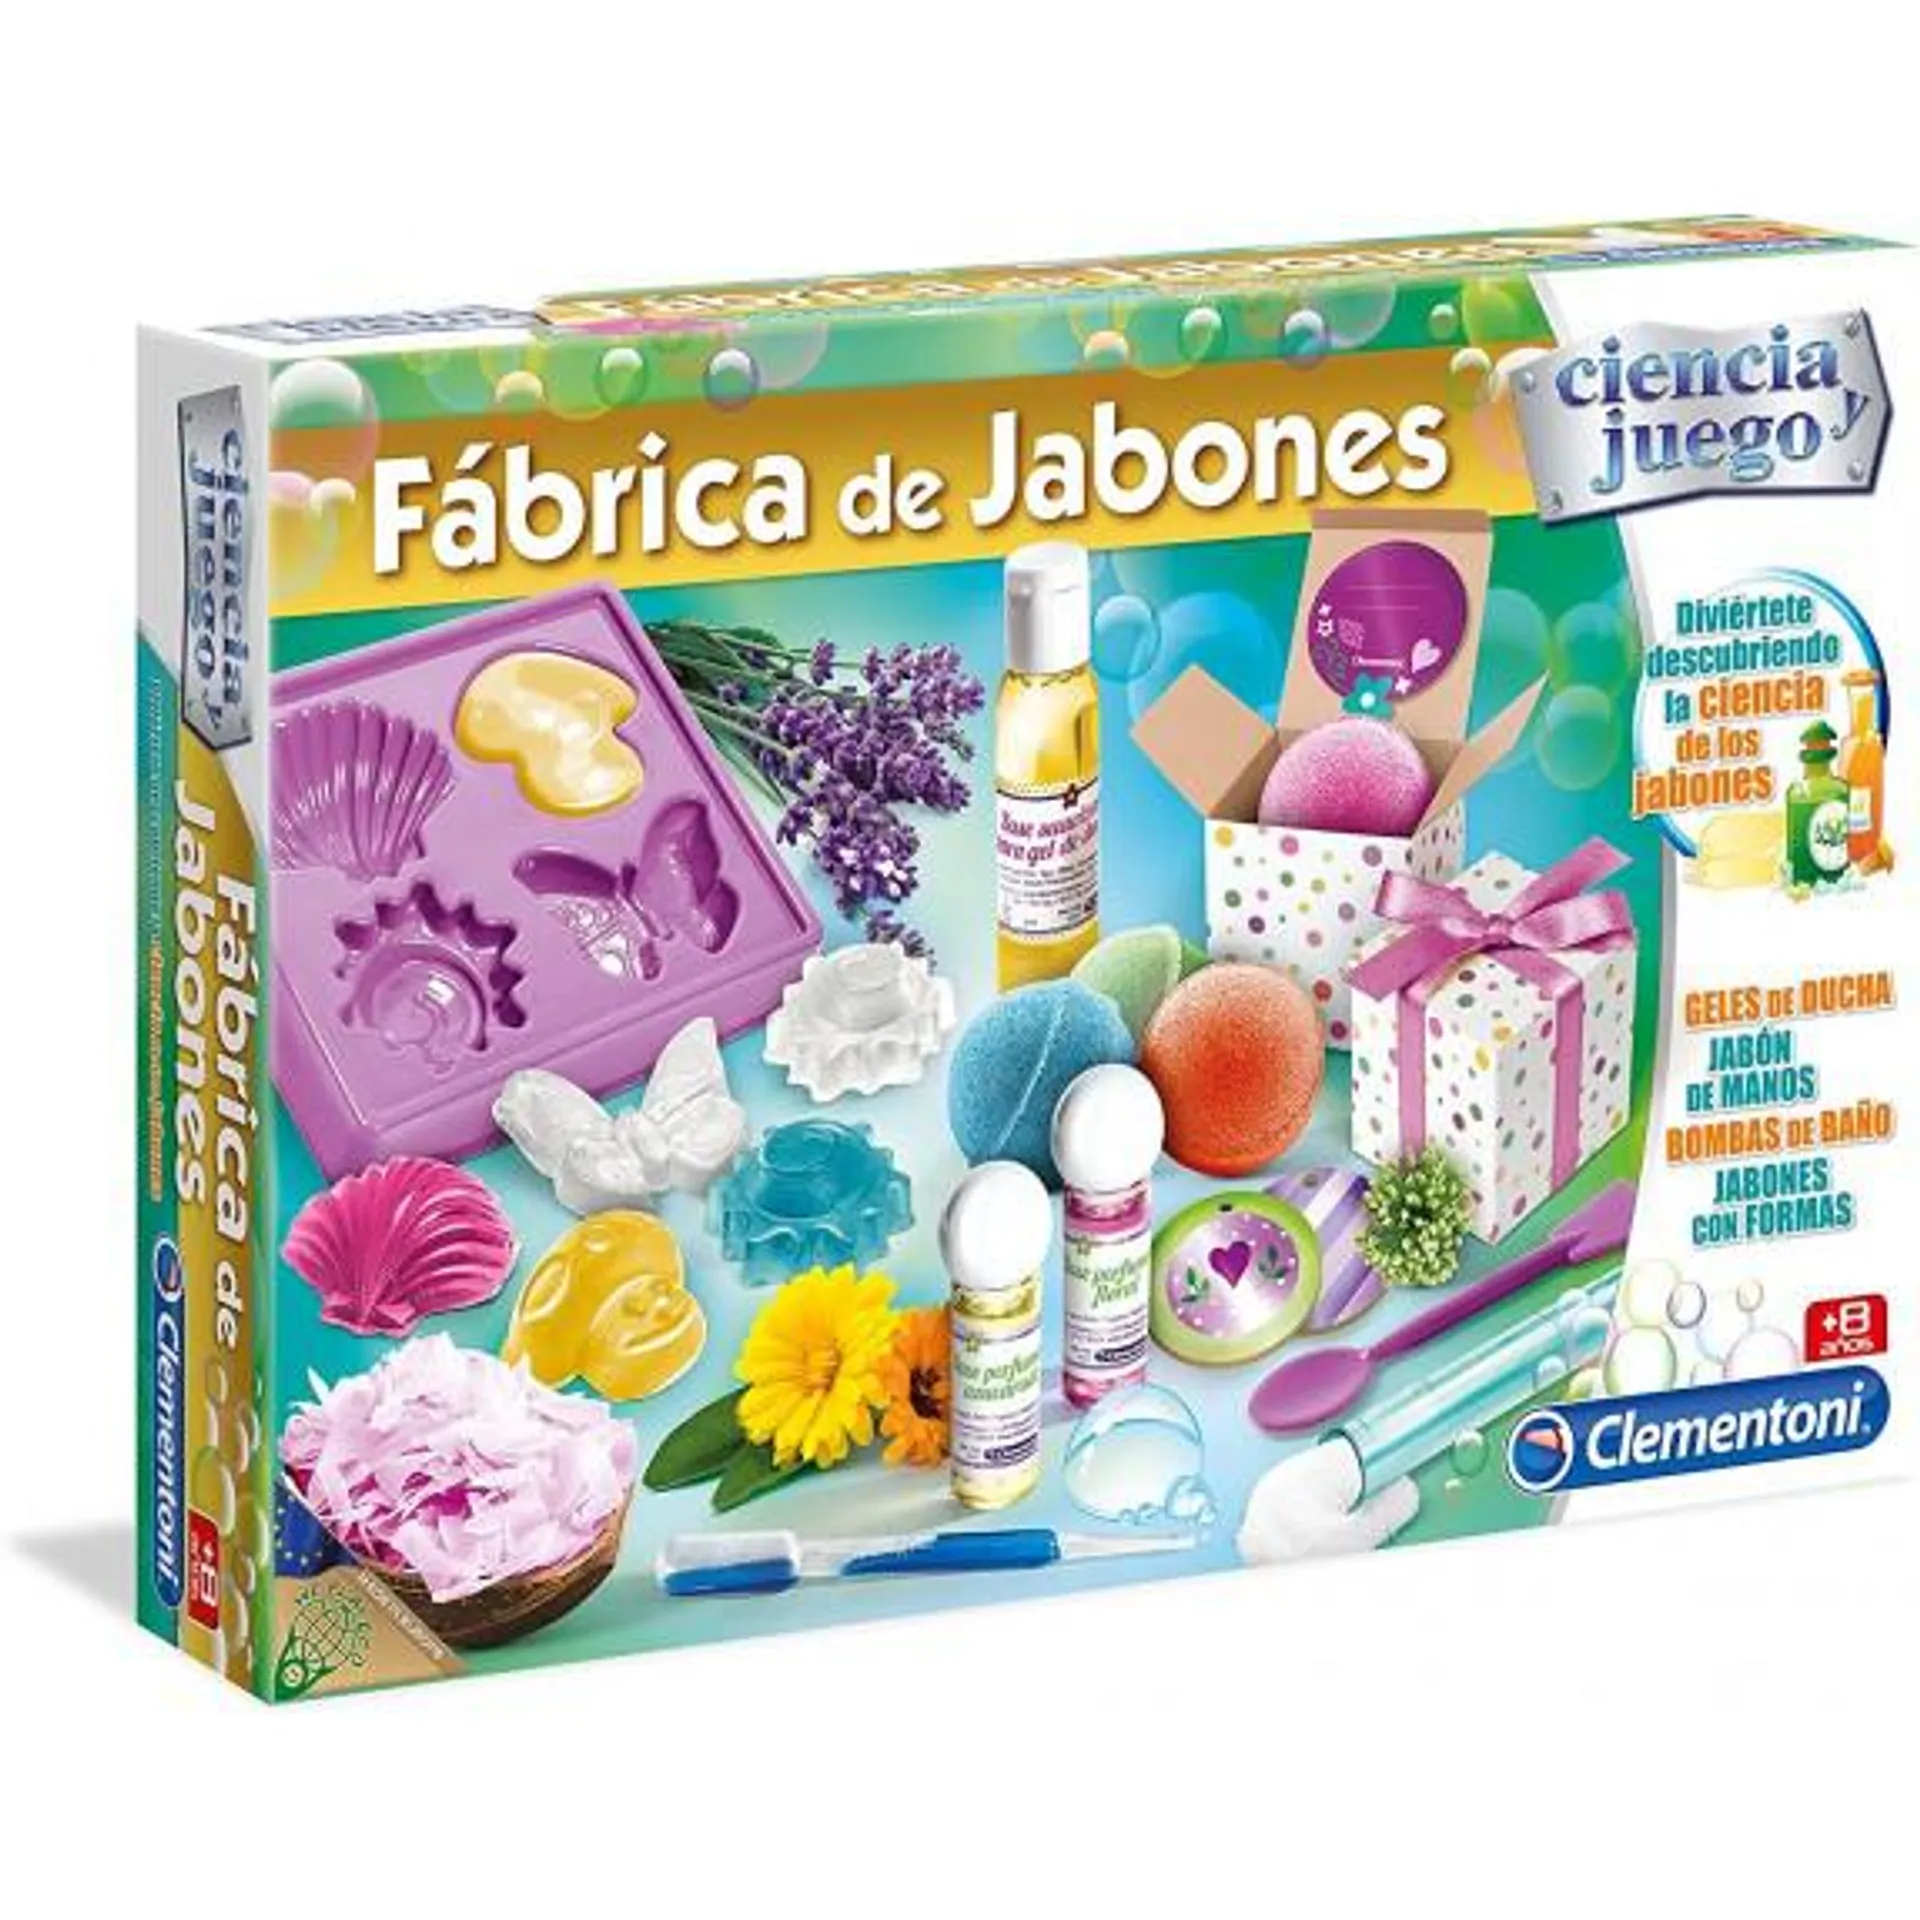 FÁBRICA DE JABONES